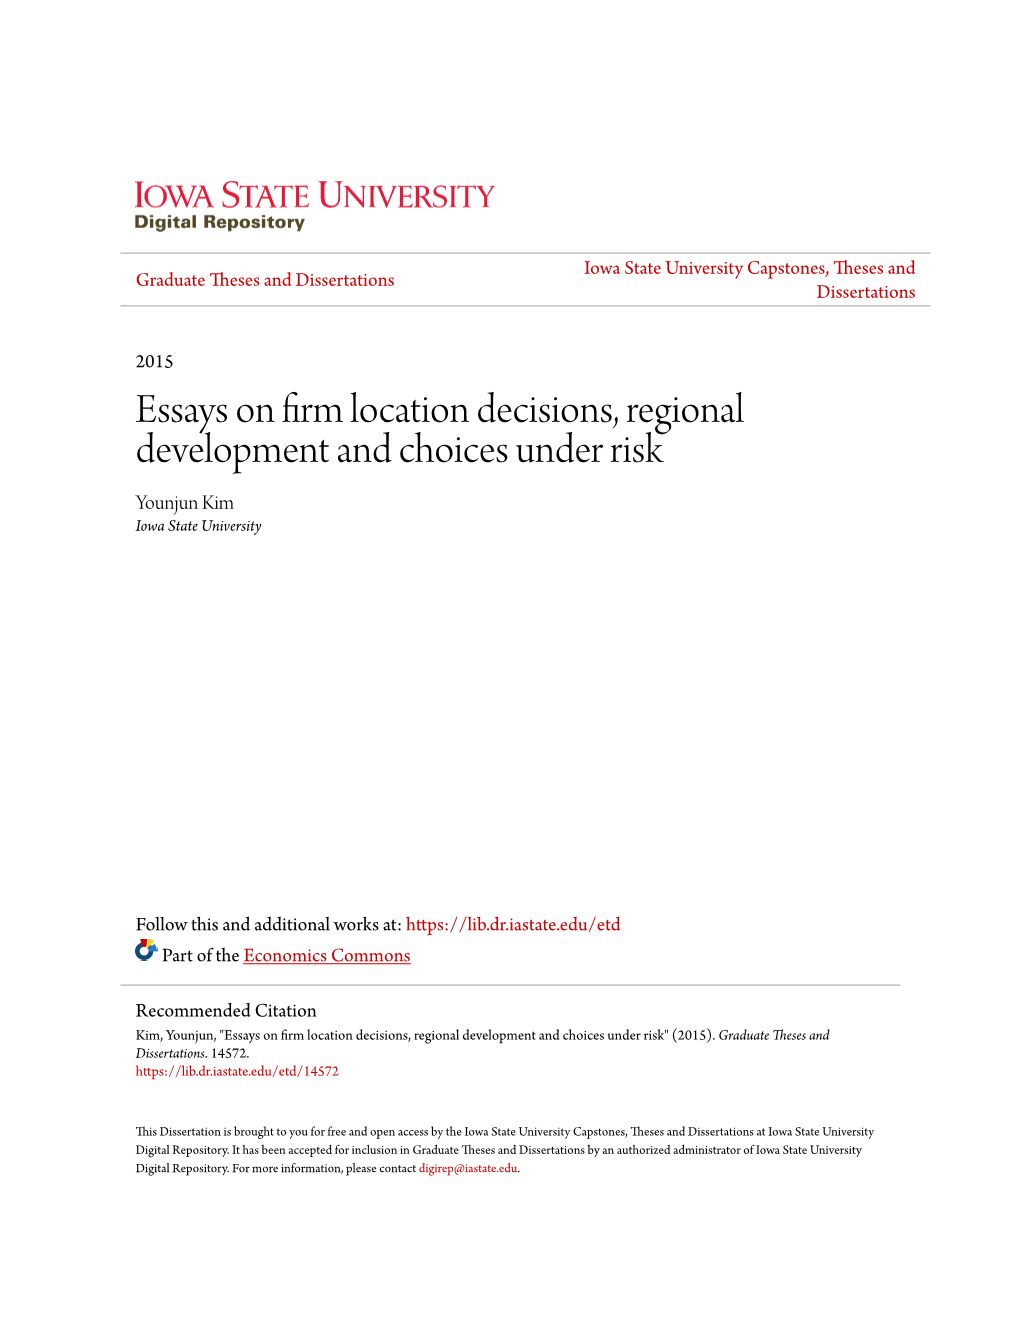 Essays on Firm Location Decisions, Regional Development and Choices Under Risk Younjun Kim Iowa State University